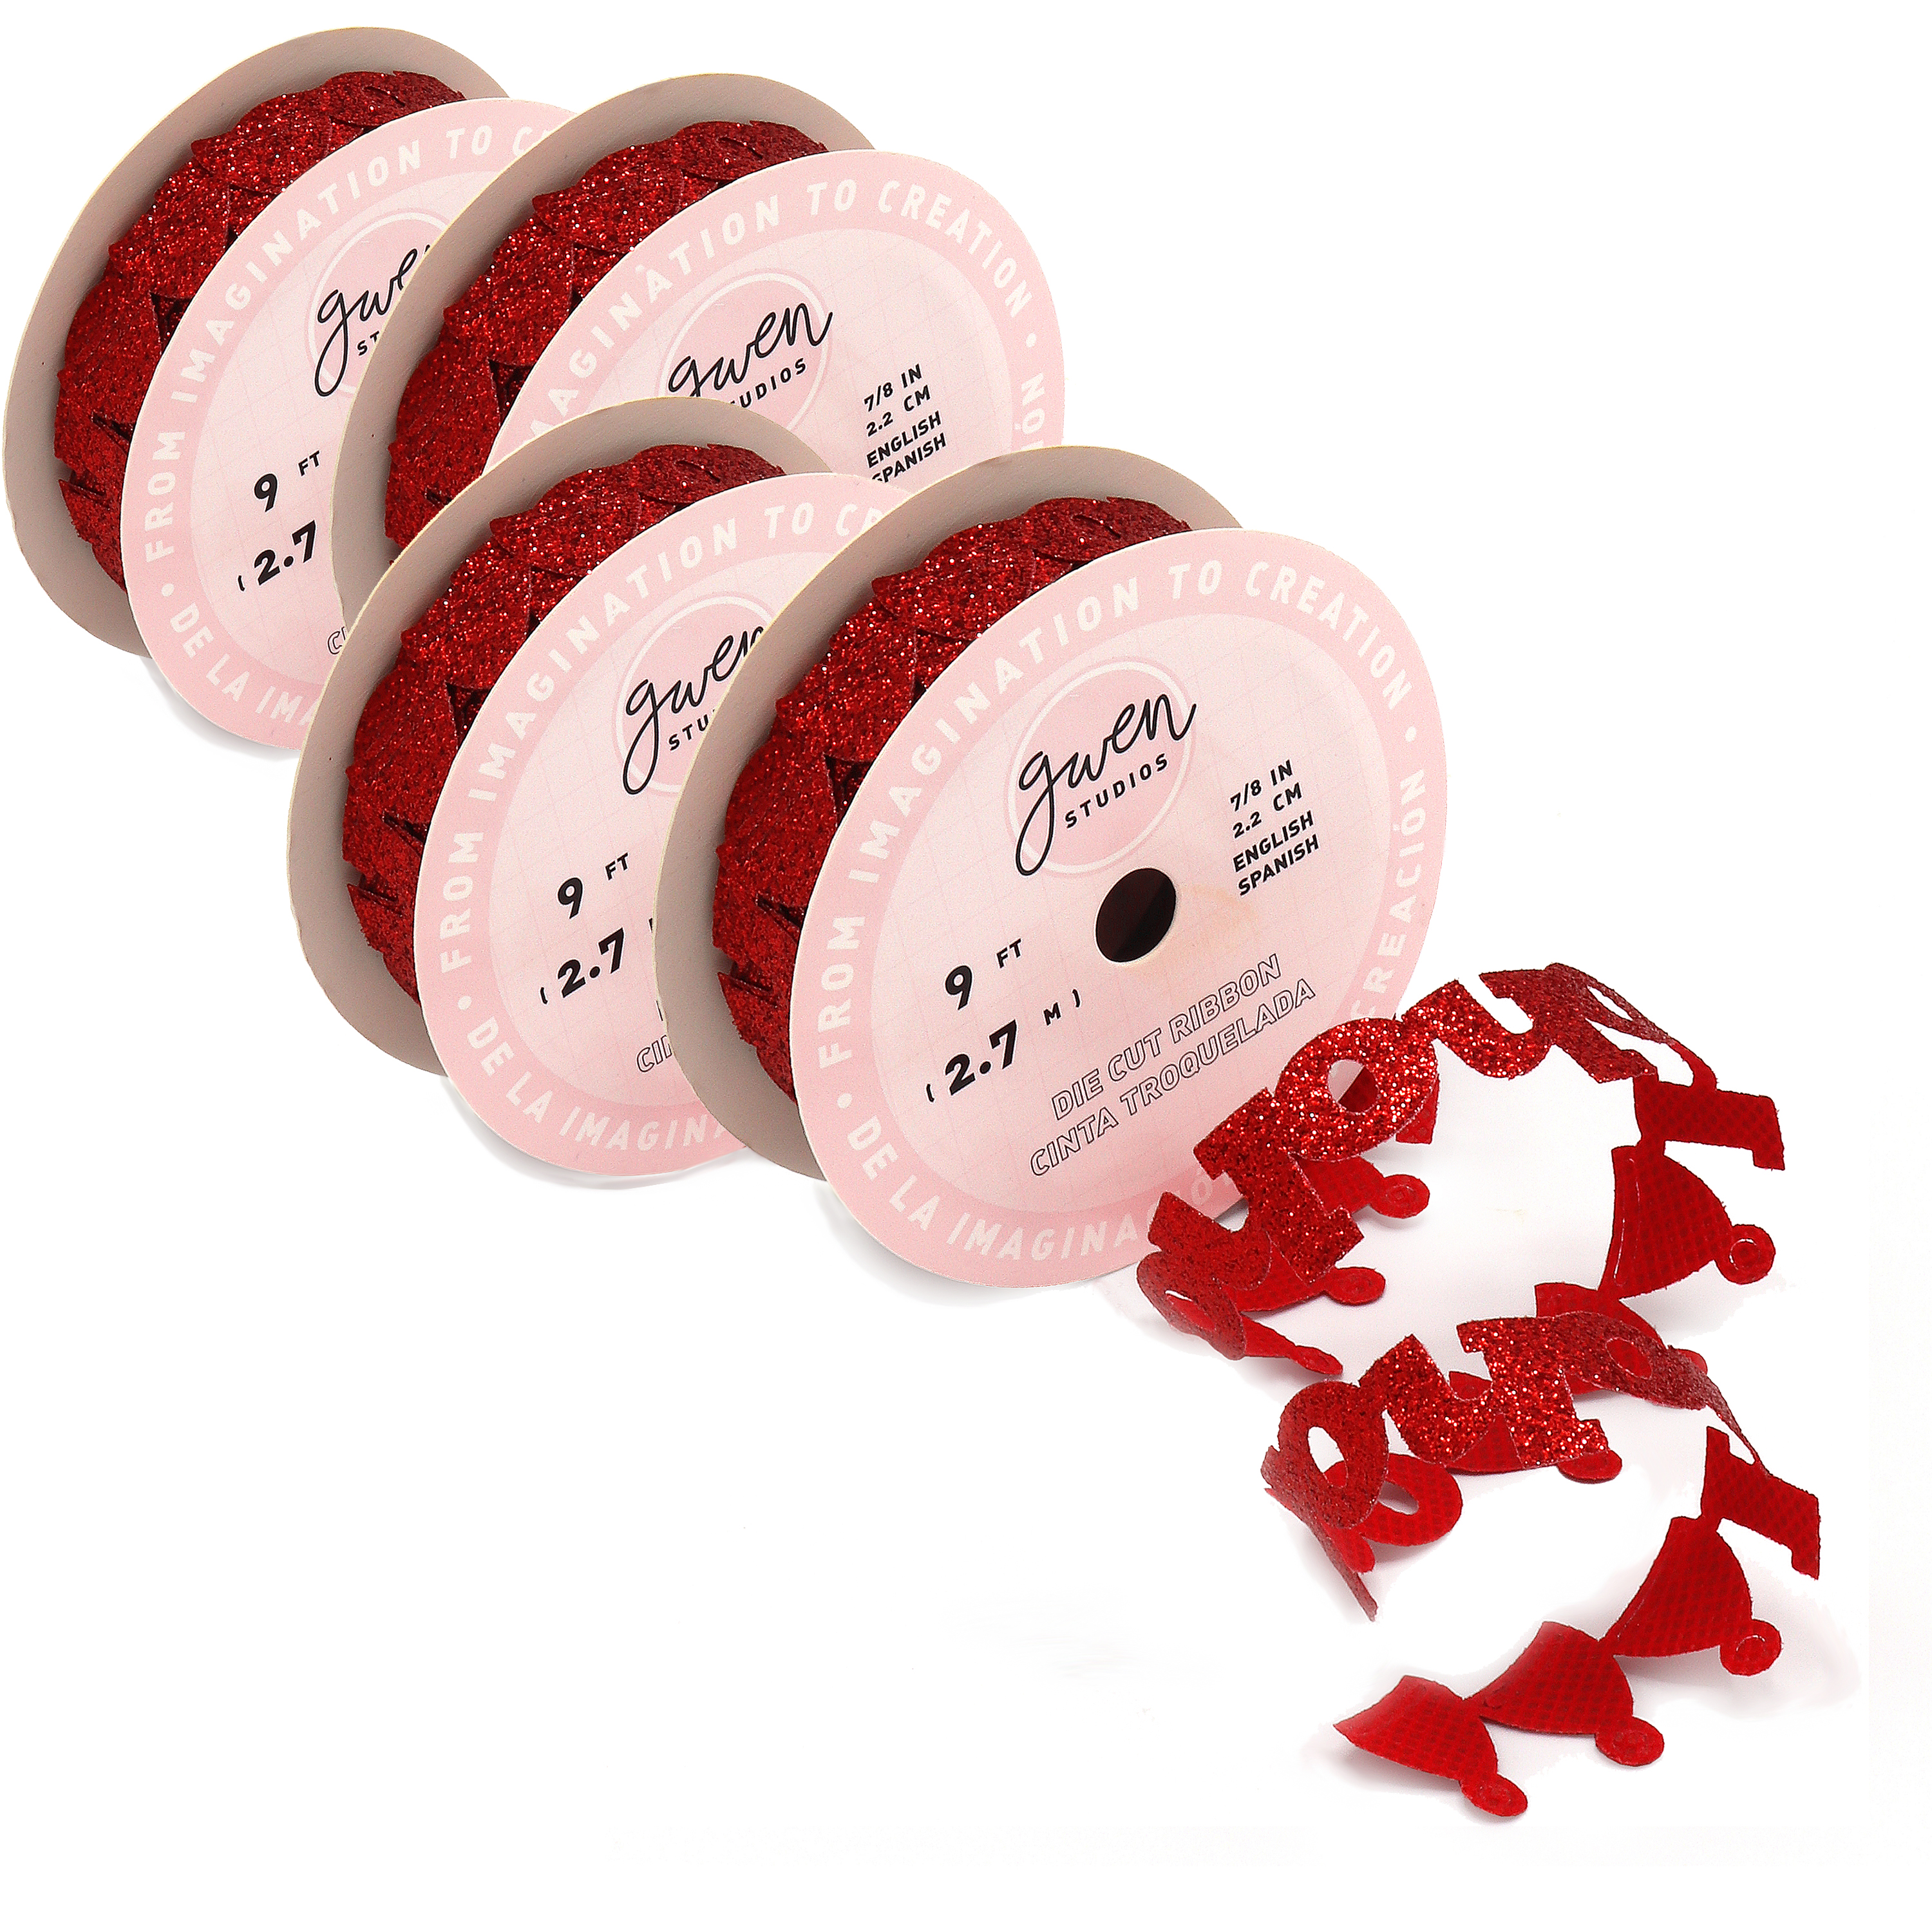 Die Cut Red Christmas Ribbon, Ho Ho Ho' Words, 7/8" x 12 Yards by Gwen Studios - image 1 of 3